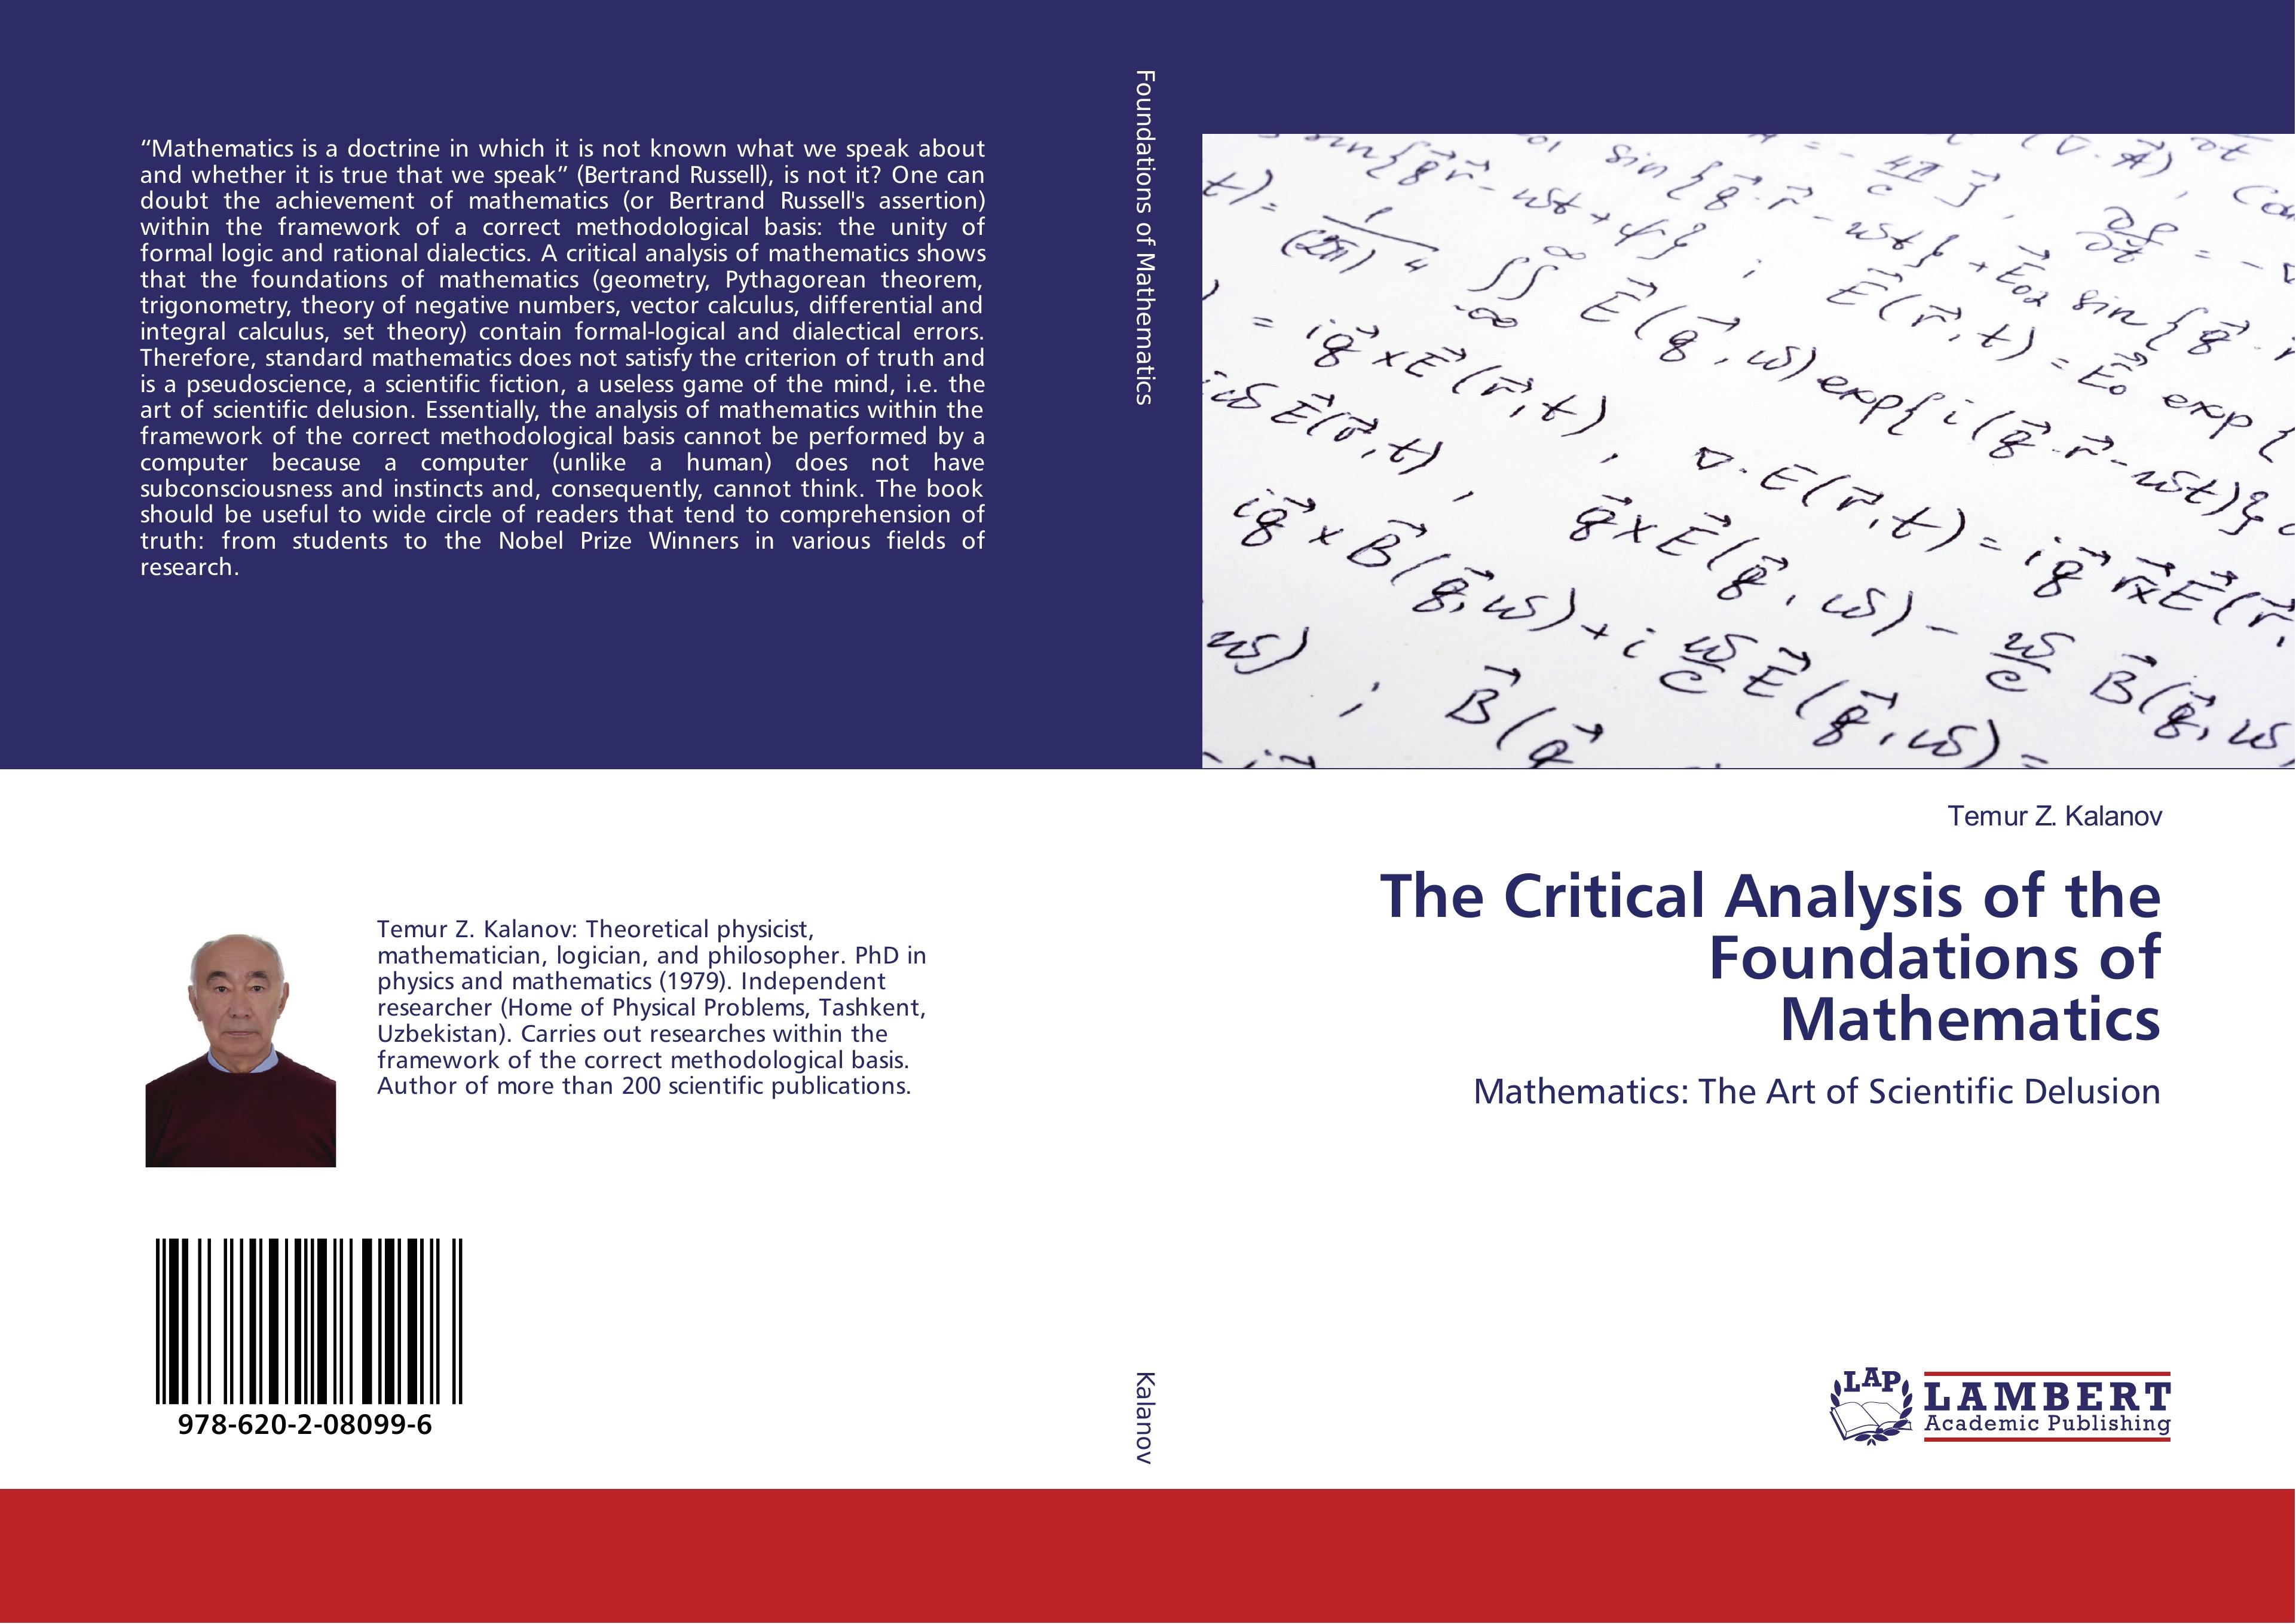 The Critical Analysis of the Foundations of Mathematics - Kalanov, Temur Z.